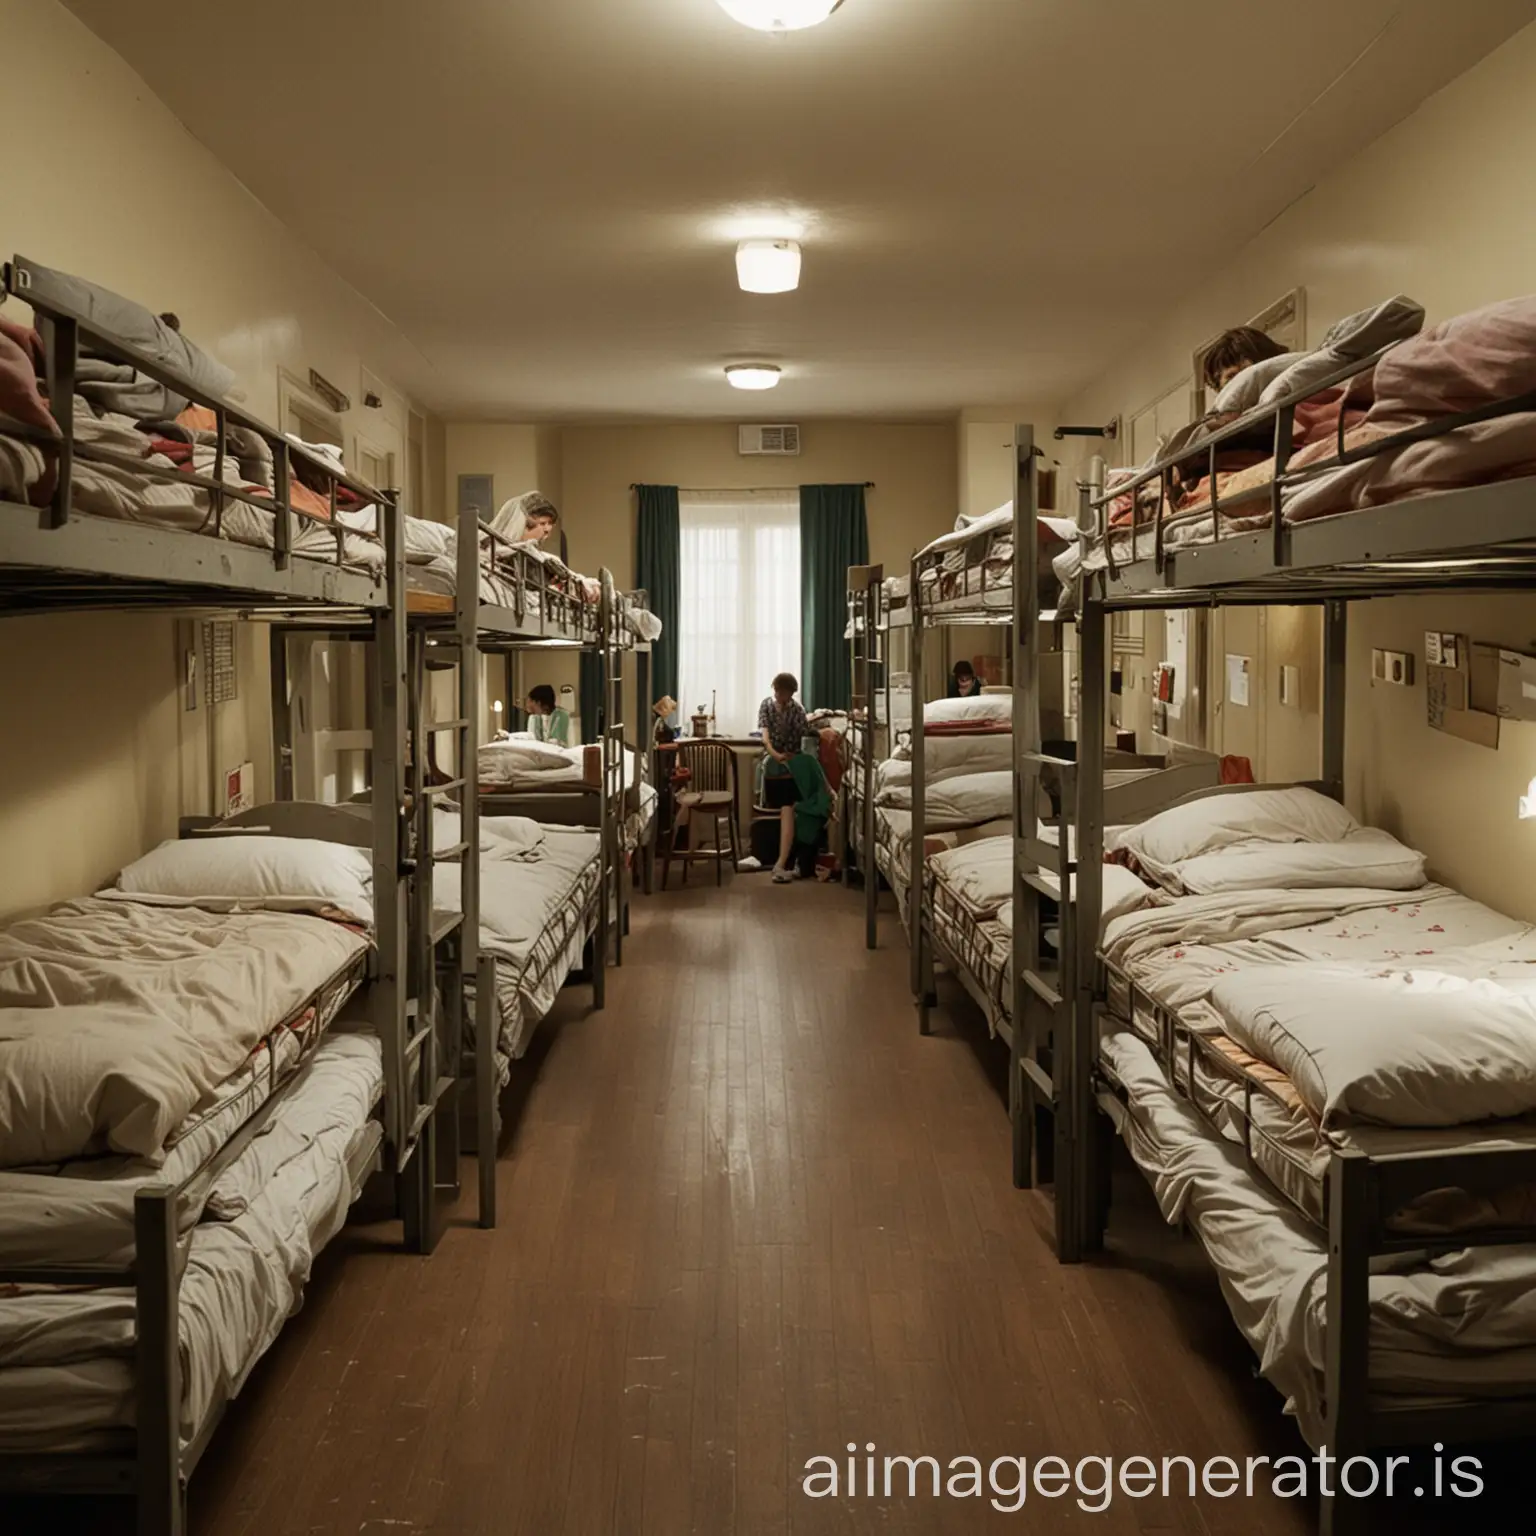 Empty-Dormitory-Room-Scene-Abandoned-Interior